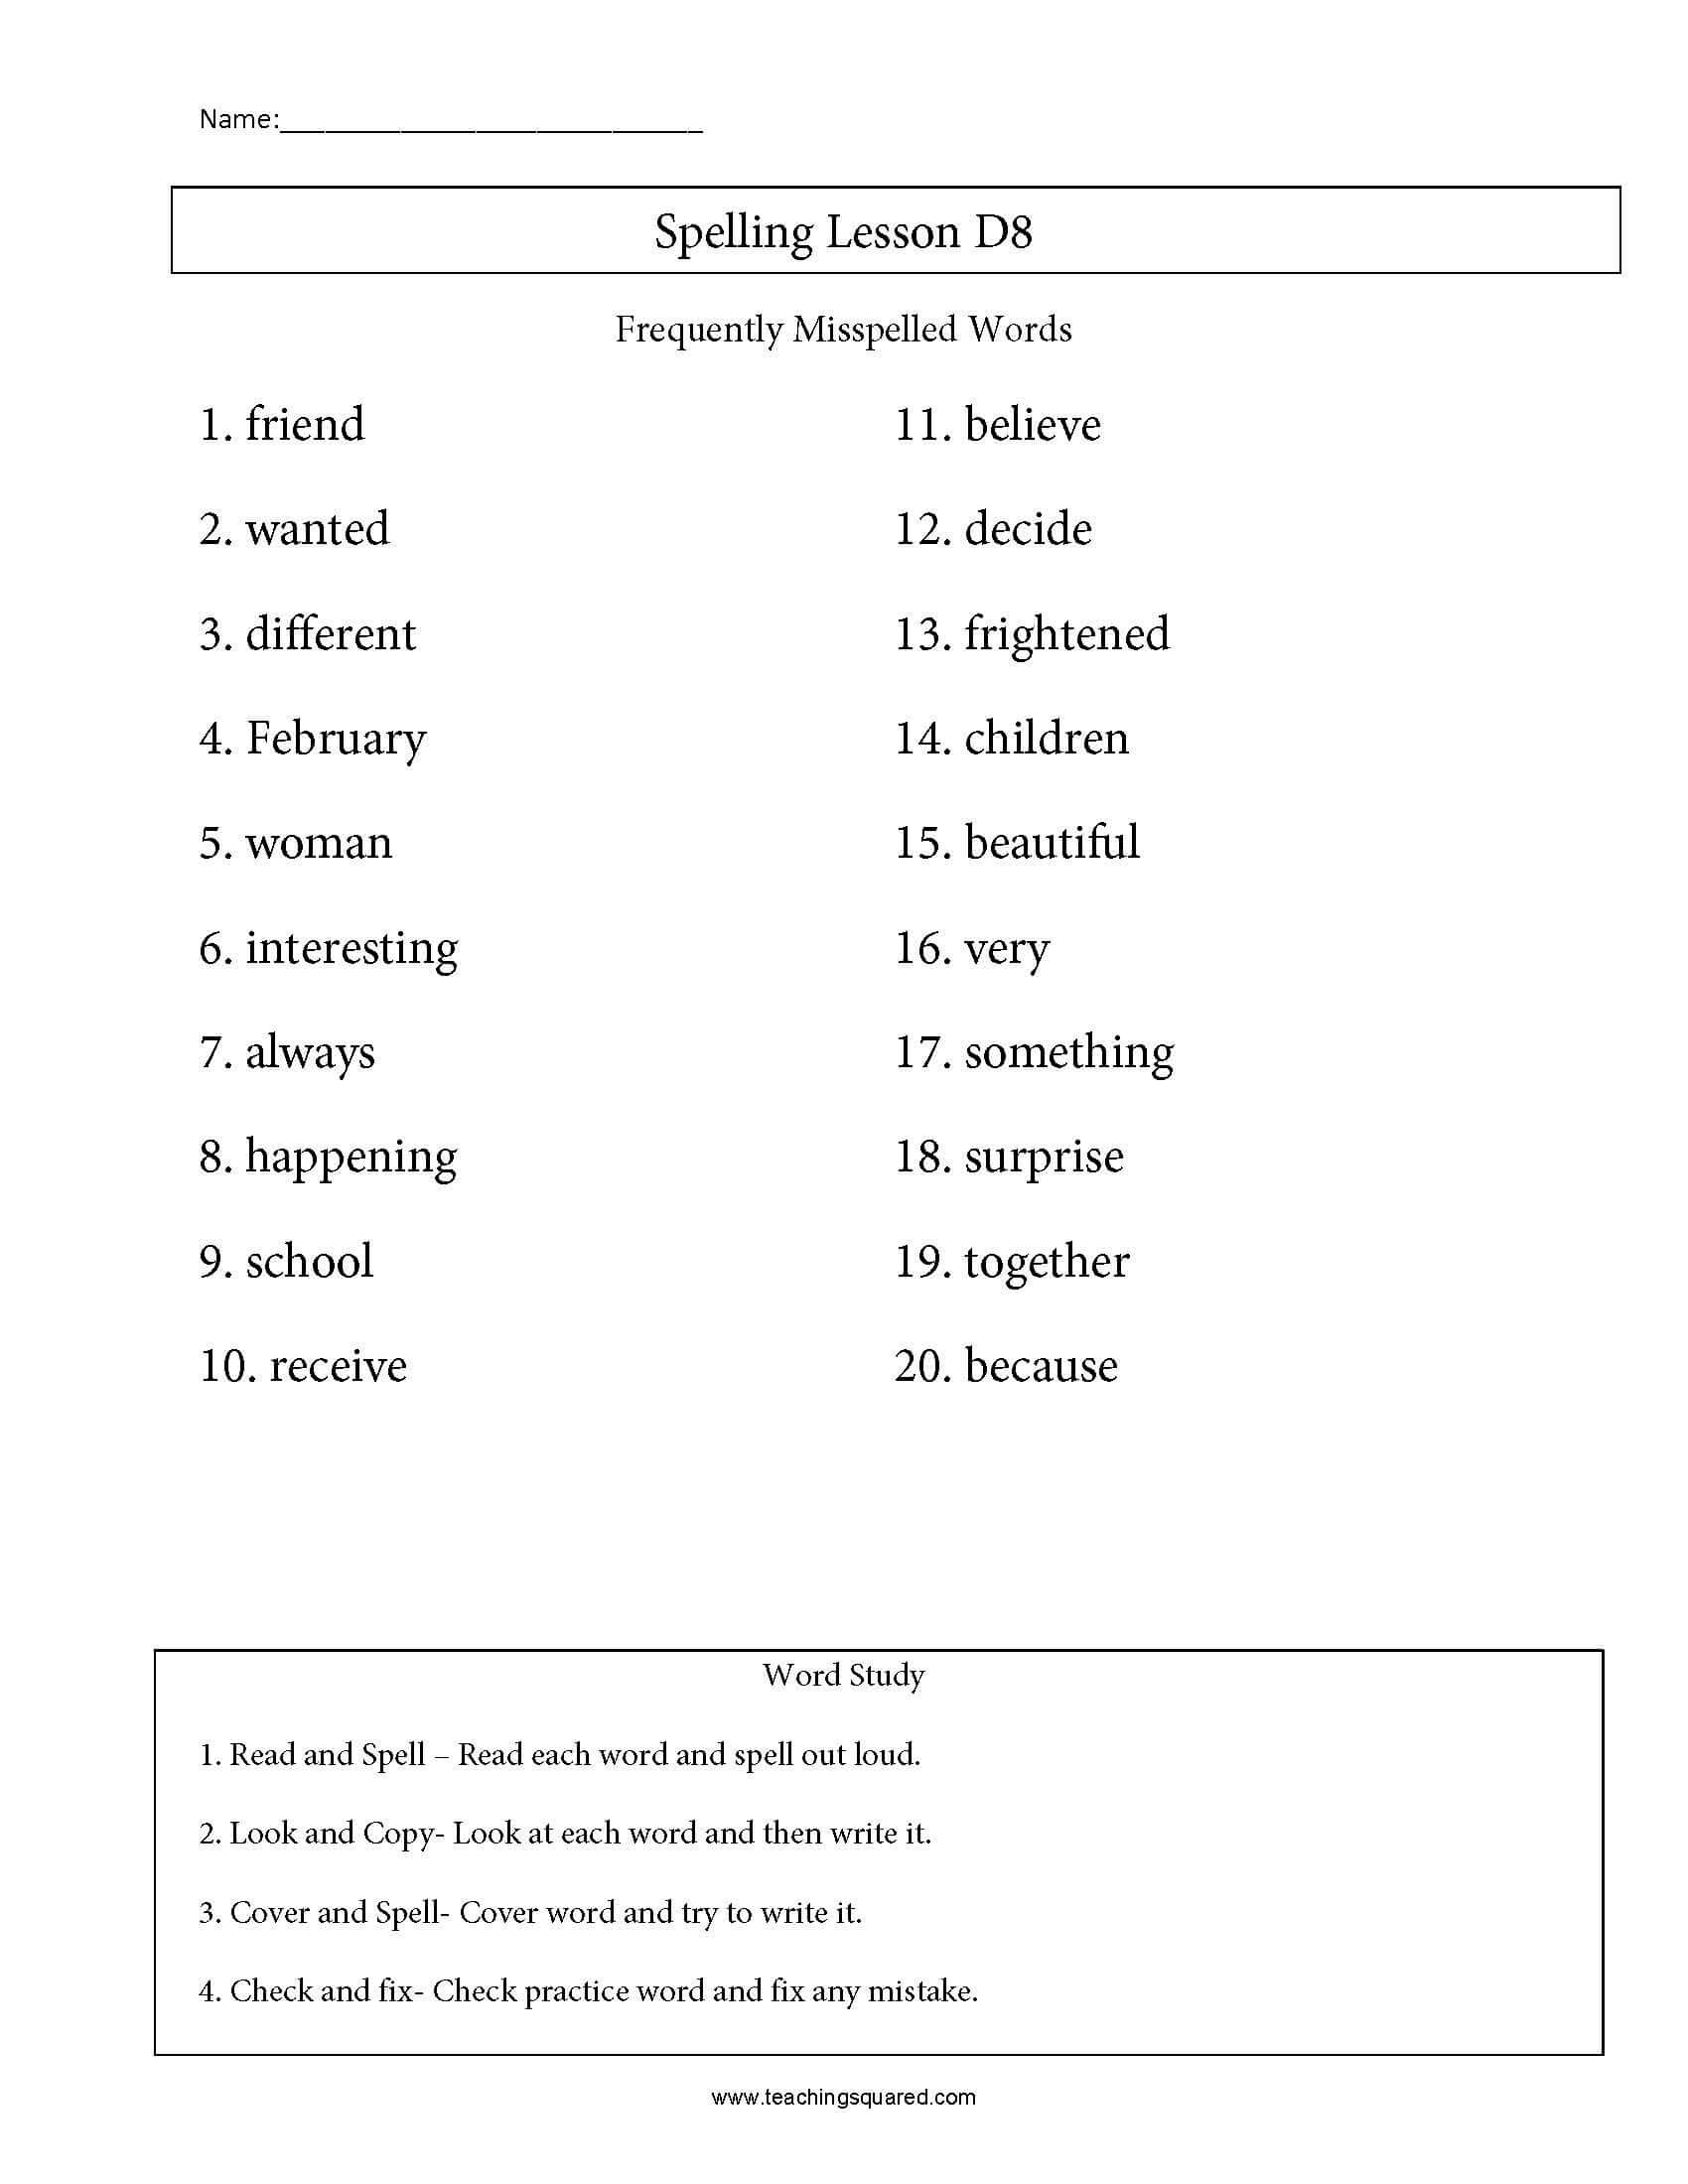 Commonly Misspelled Words Worksheet Spelling List D8 Misspelled Words Teaching Squared